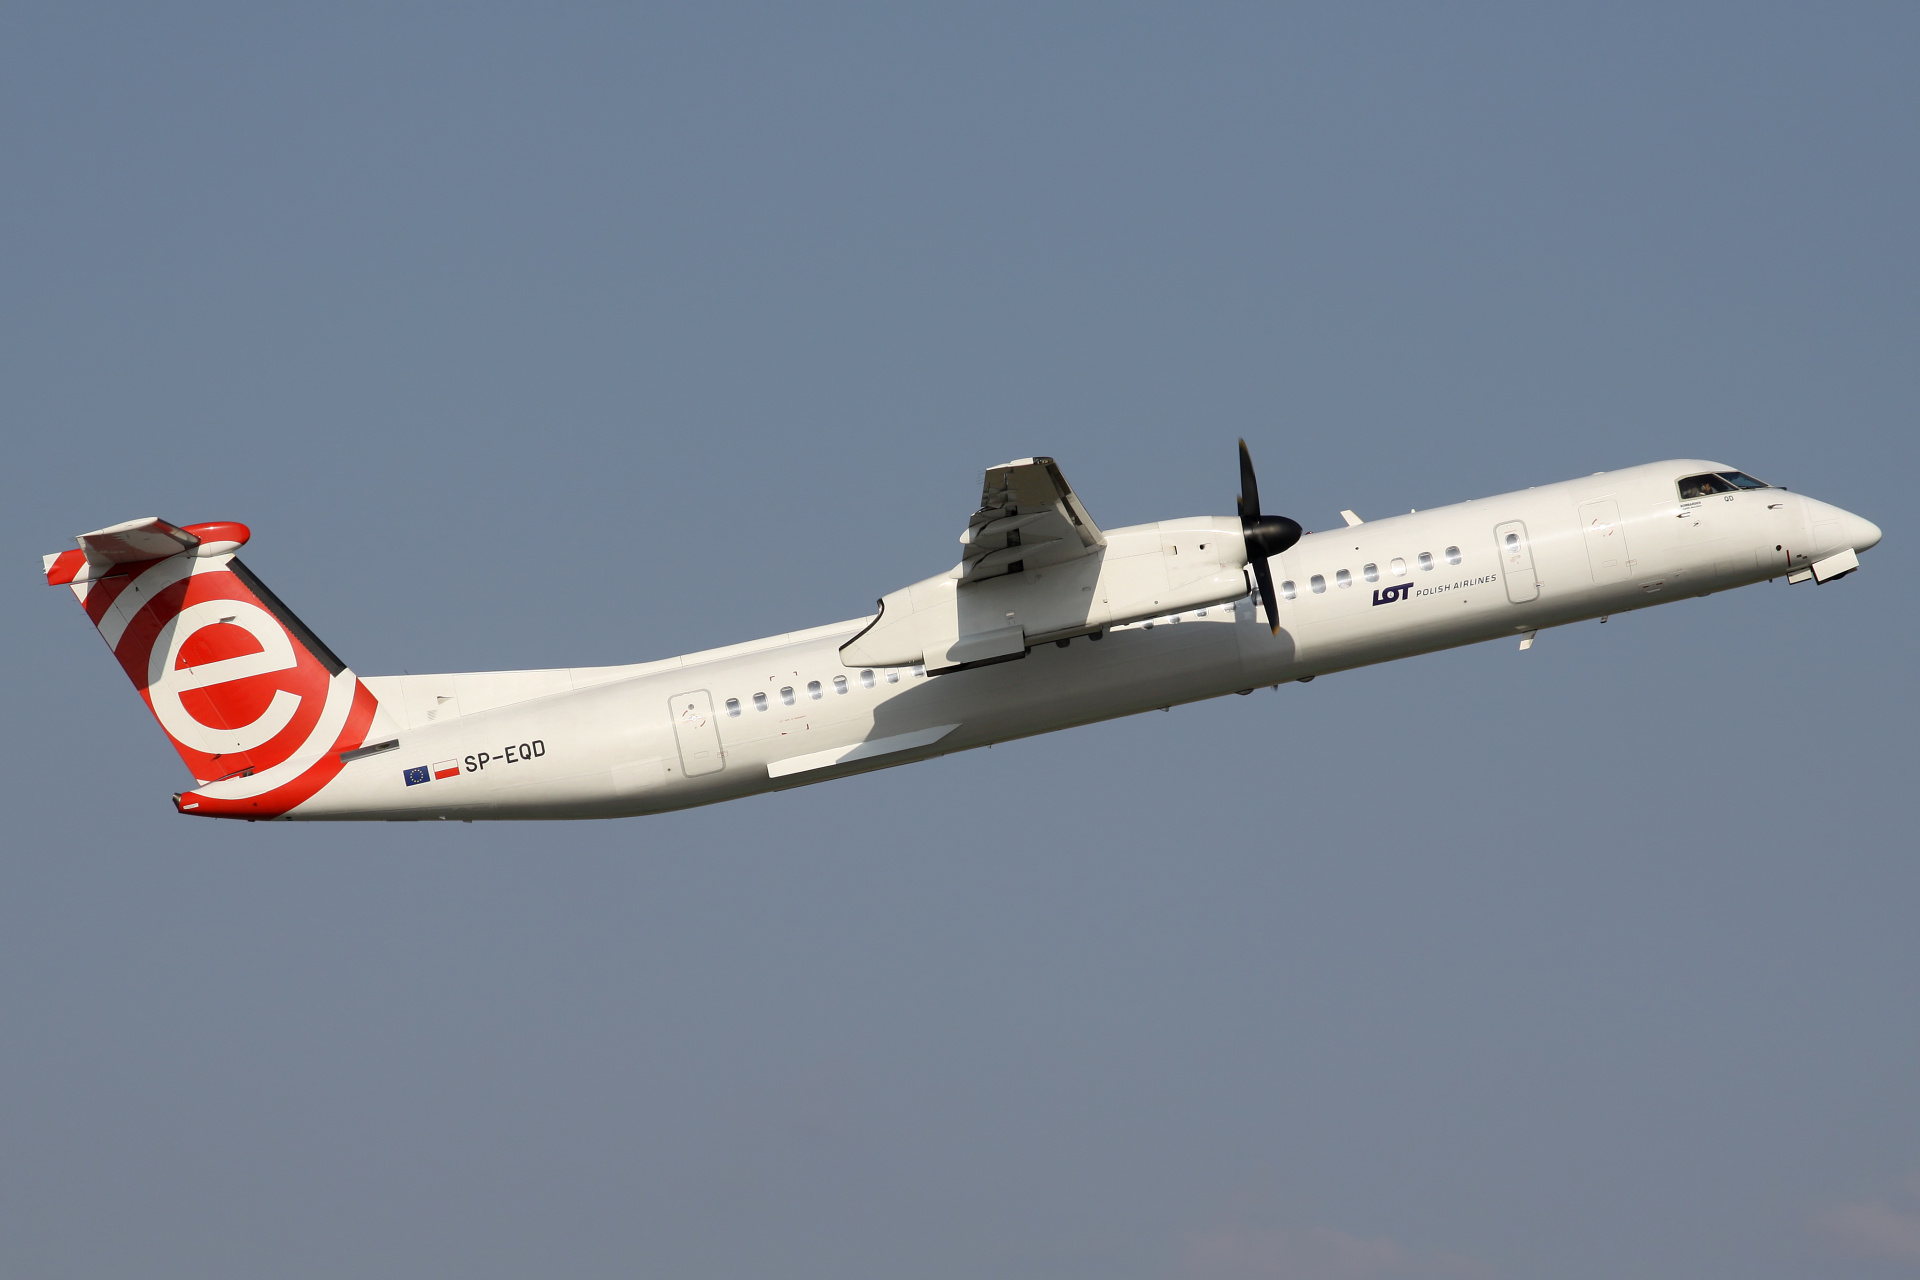 SP-EQD (EuroLOT partial livery) (Aircraft » EPWA Spotting » De Havilland Canada DHC-8 Dash 8 » LOT Polish Airlines)